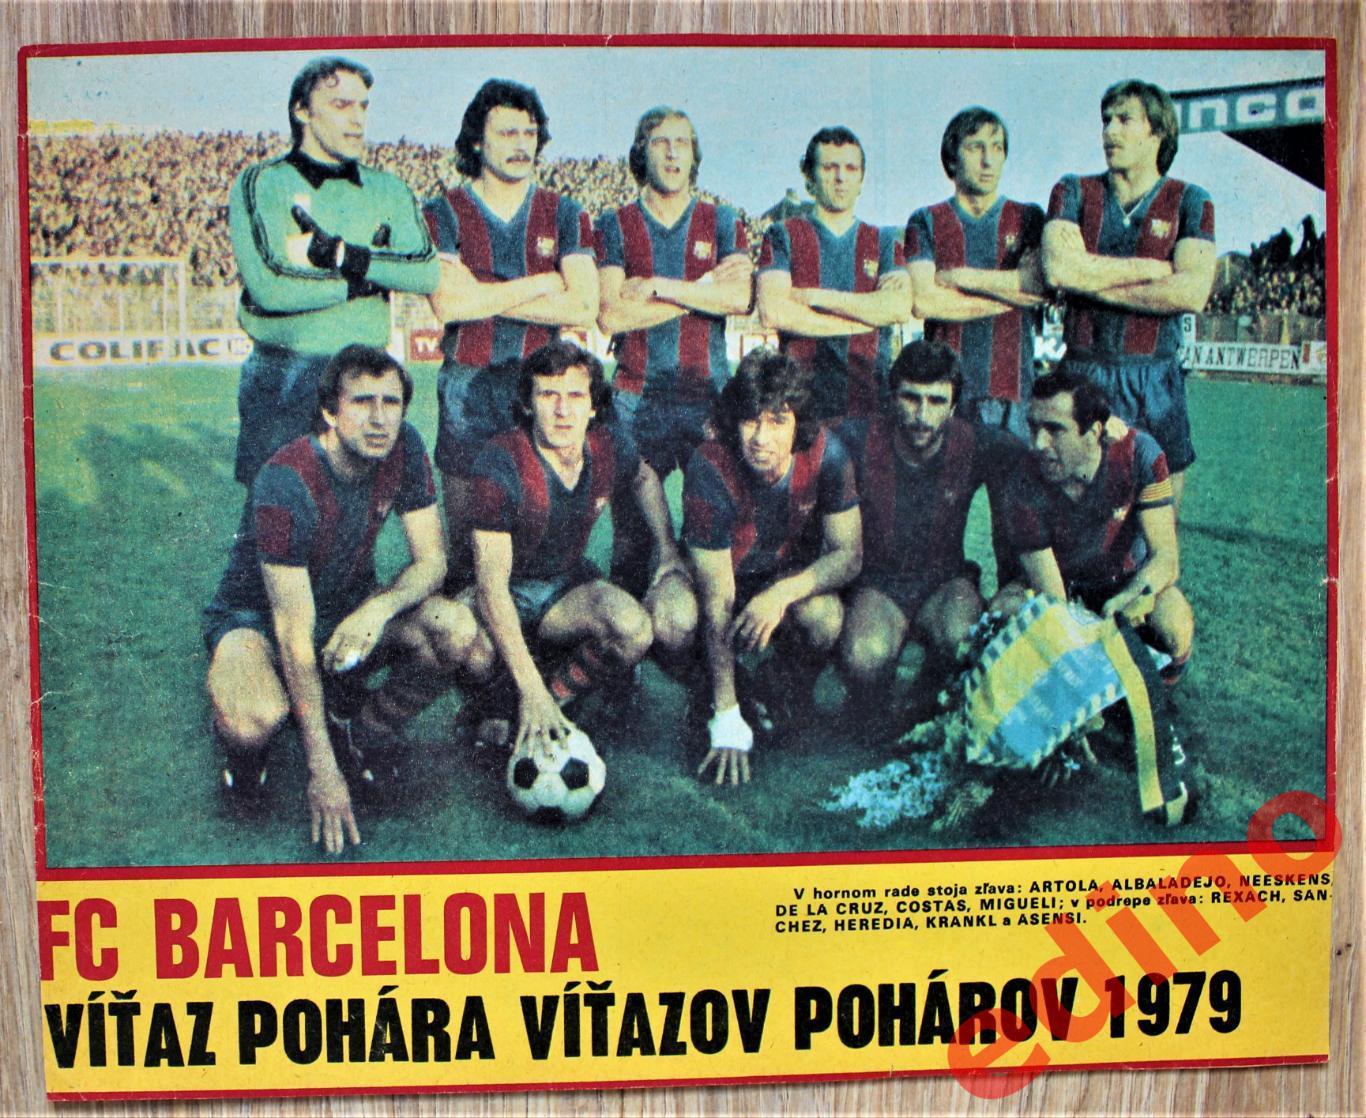 журнал Start 1979 год. Барселона обладатель кубка кубков .